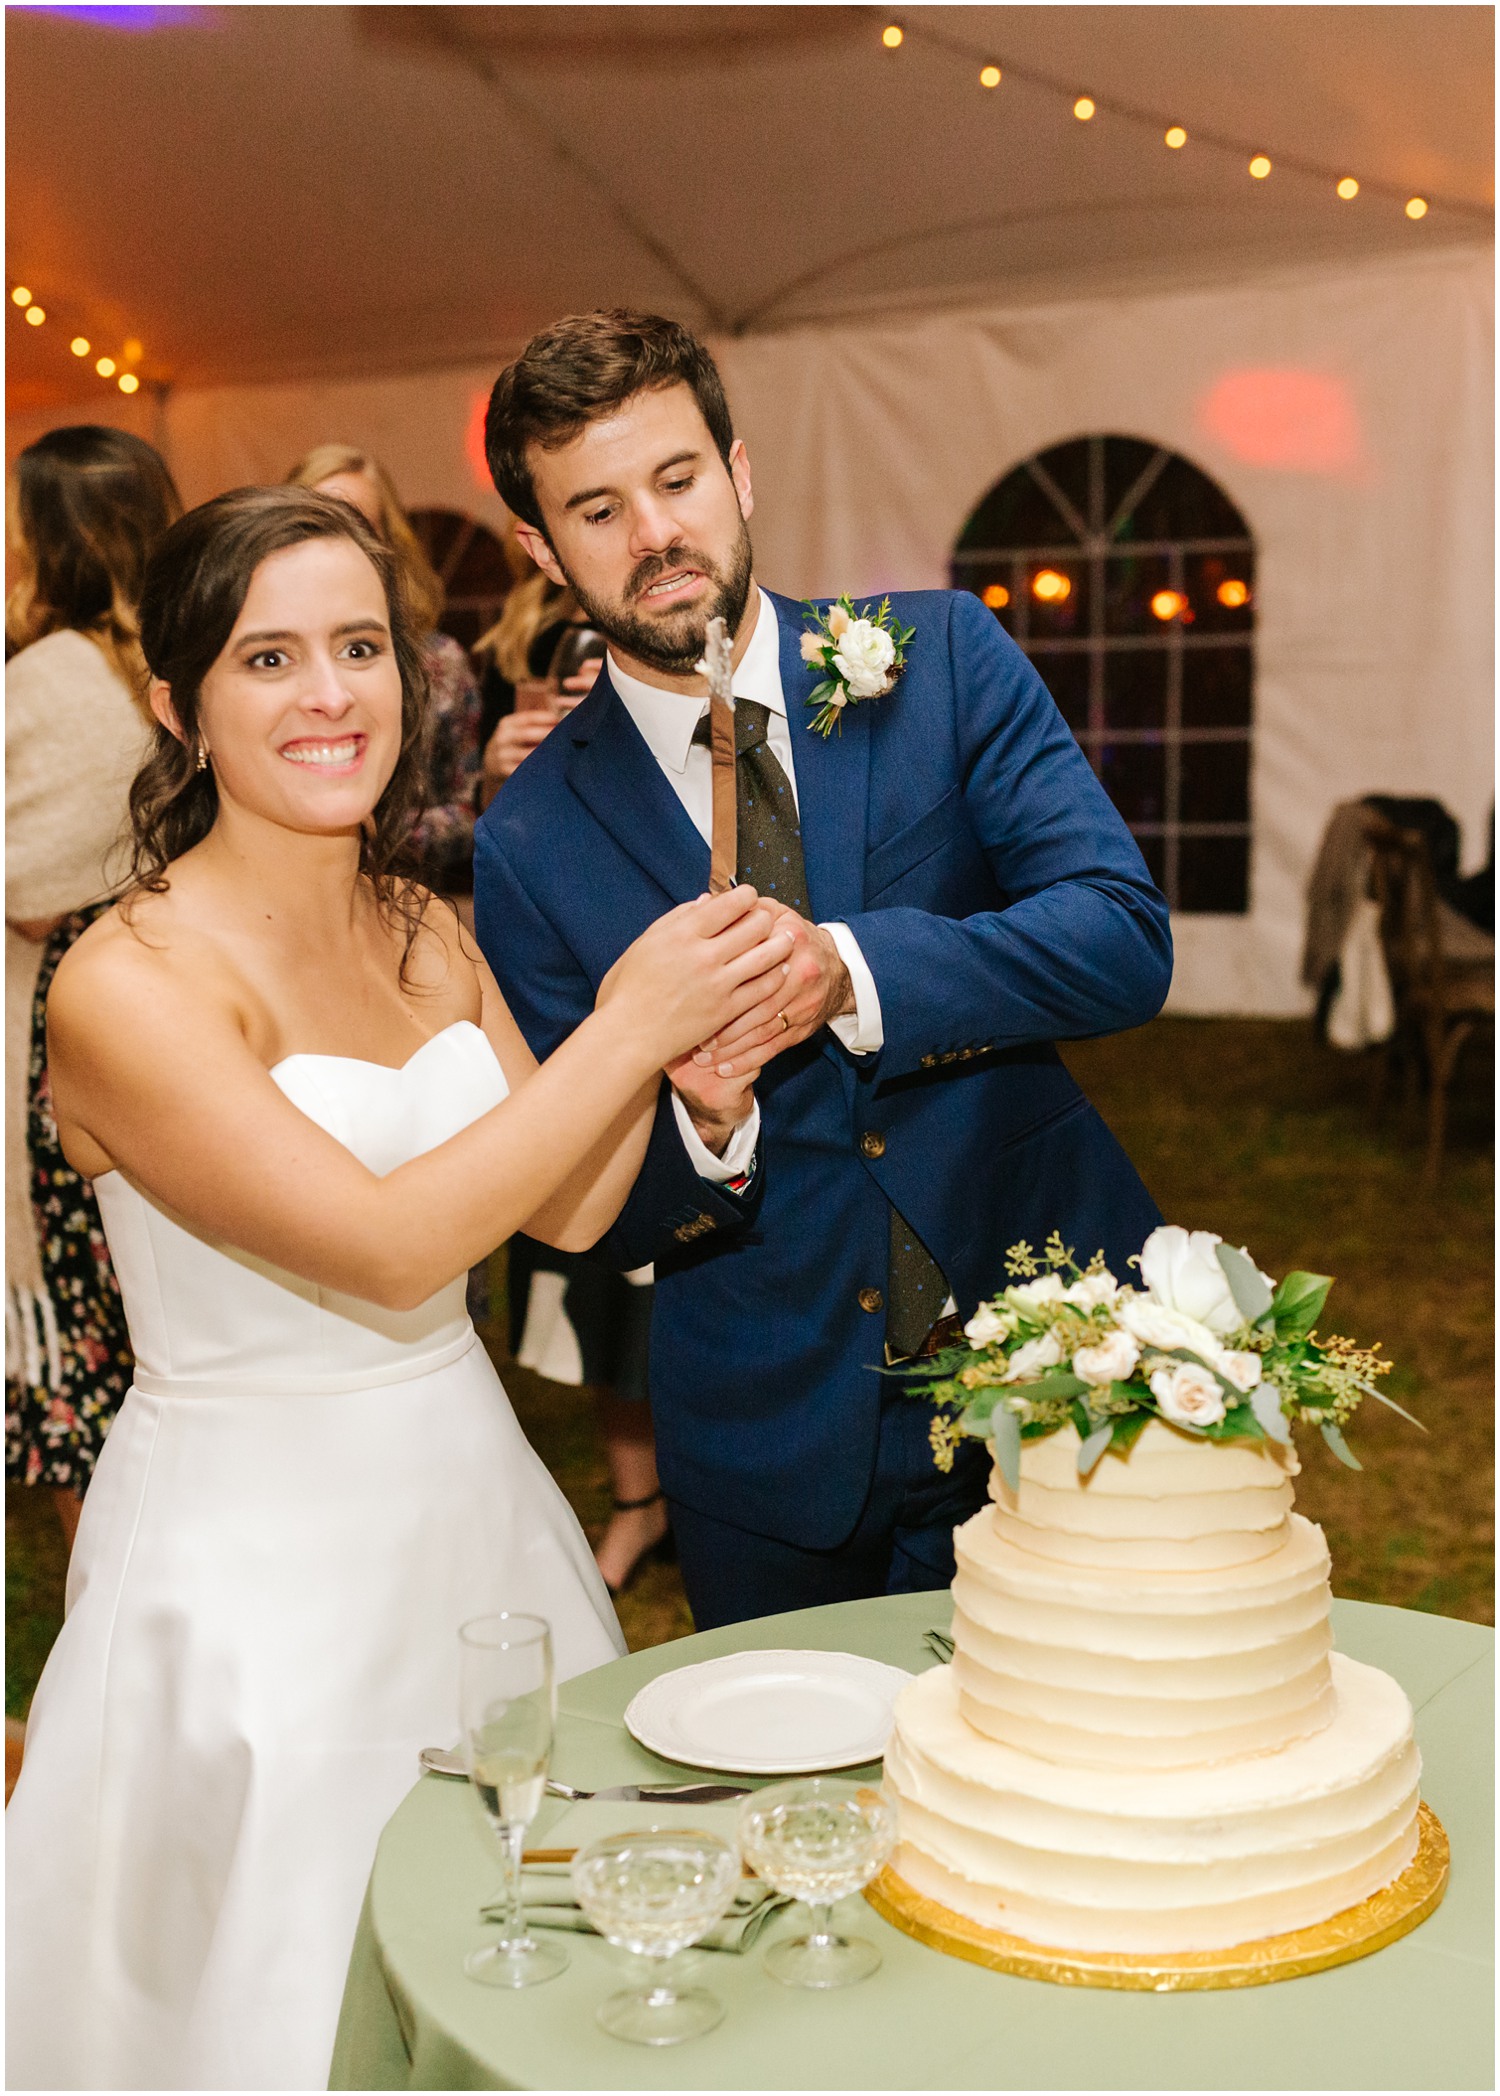 newlyweds take silly photo with cake knife during Asheville wedding reception